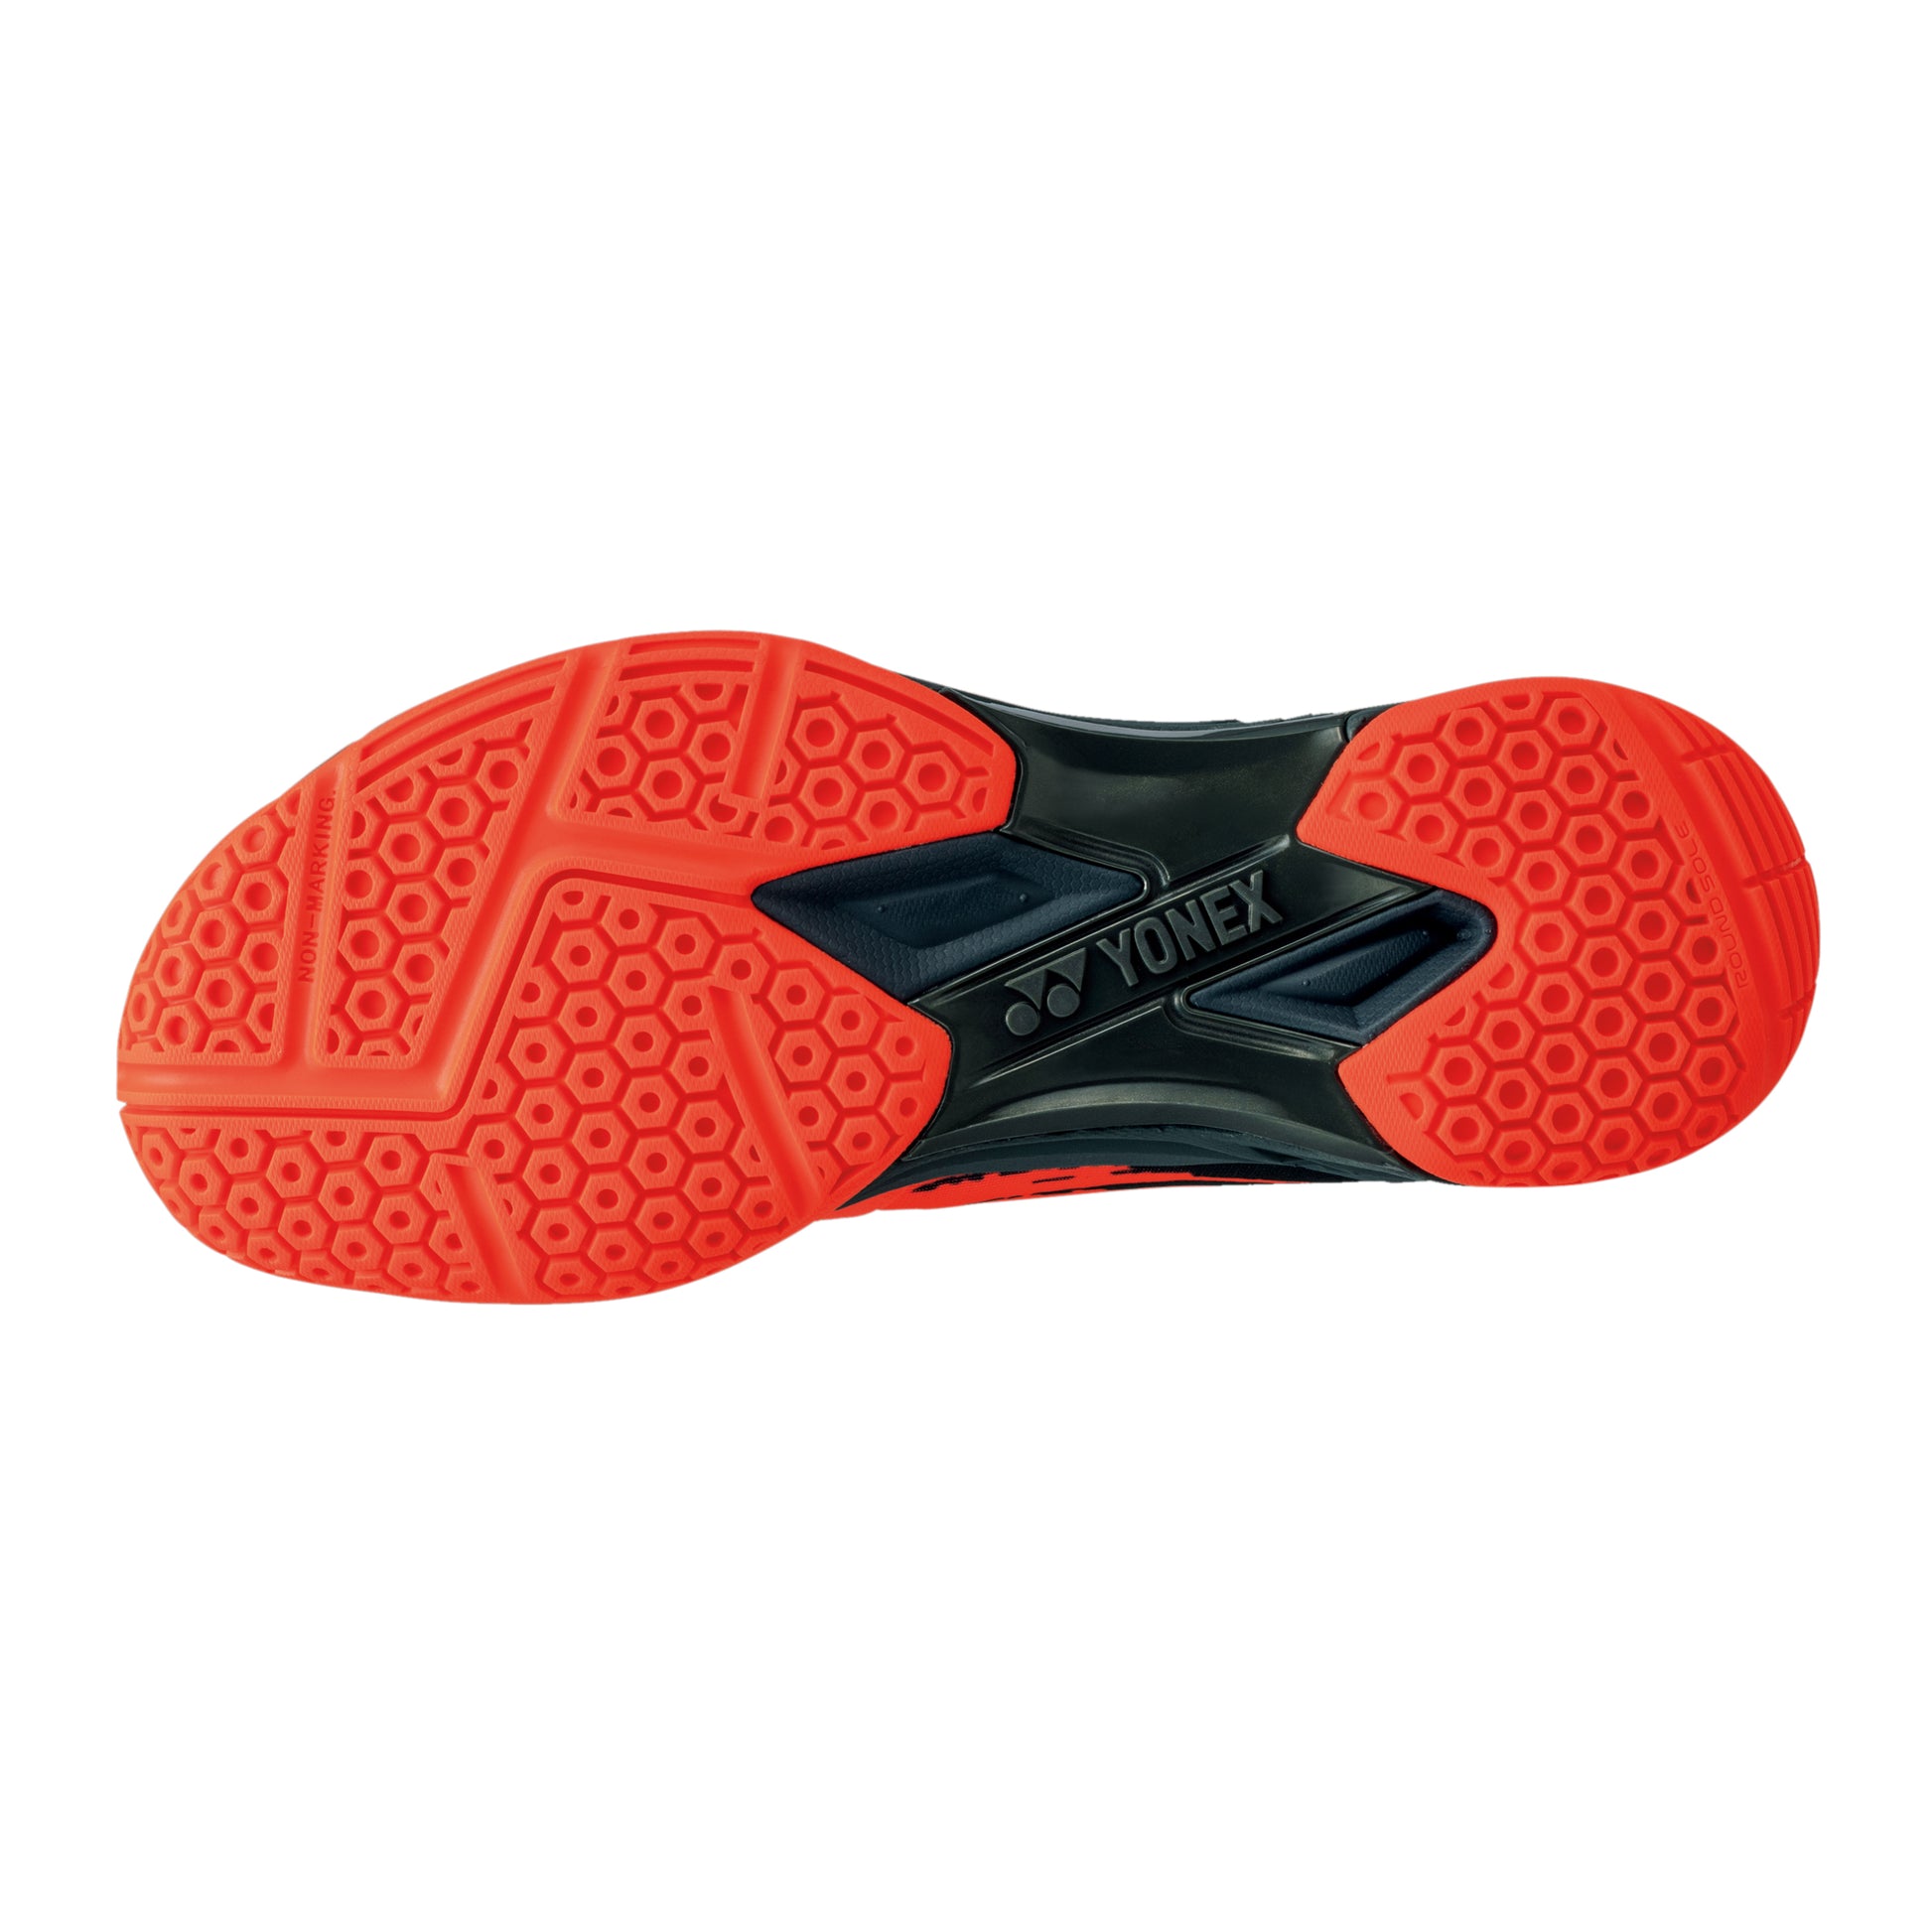 Yonex Power Cushion Cascade Drive Badminton Shoes - Best Price online Prokicksports.com